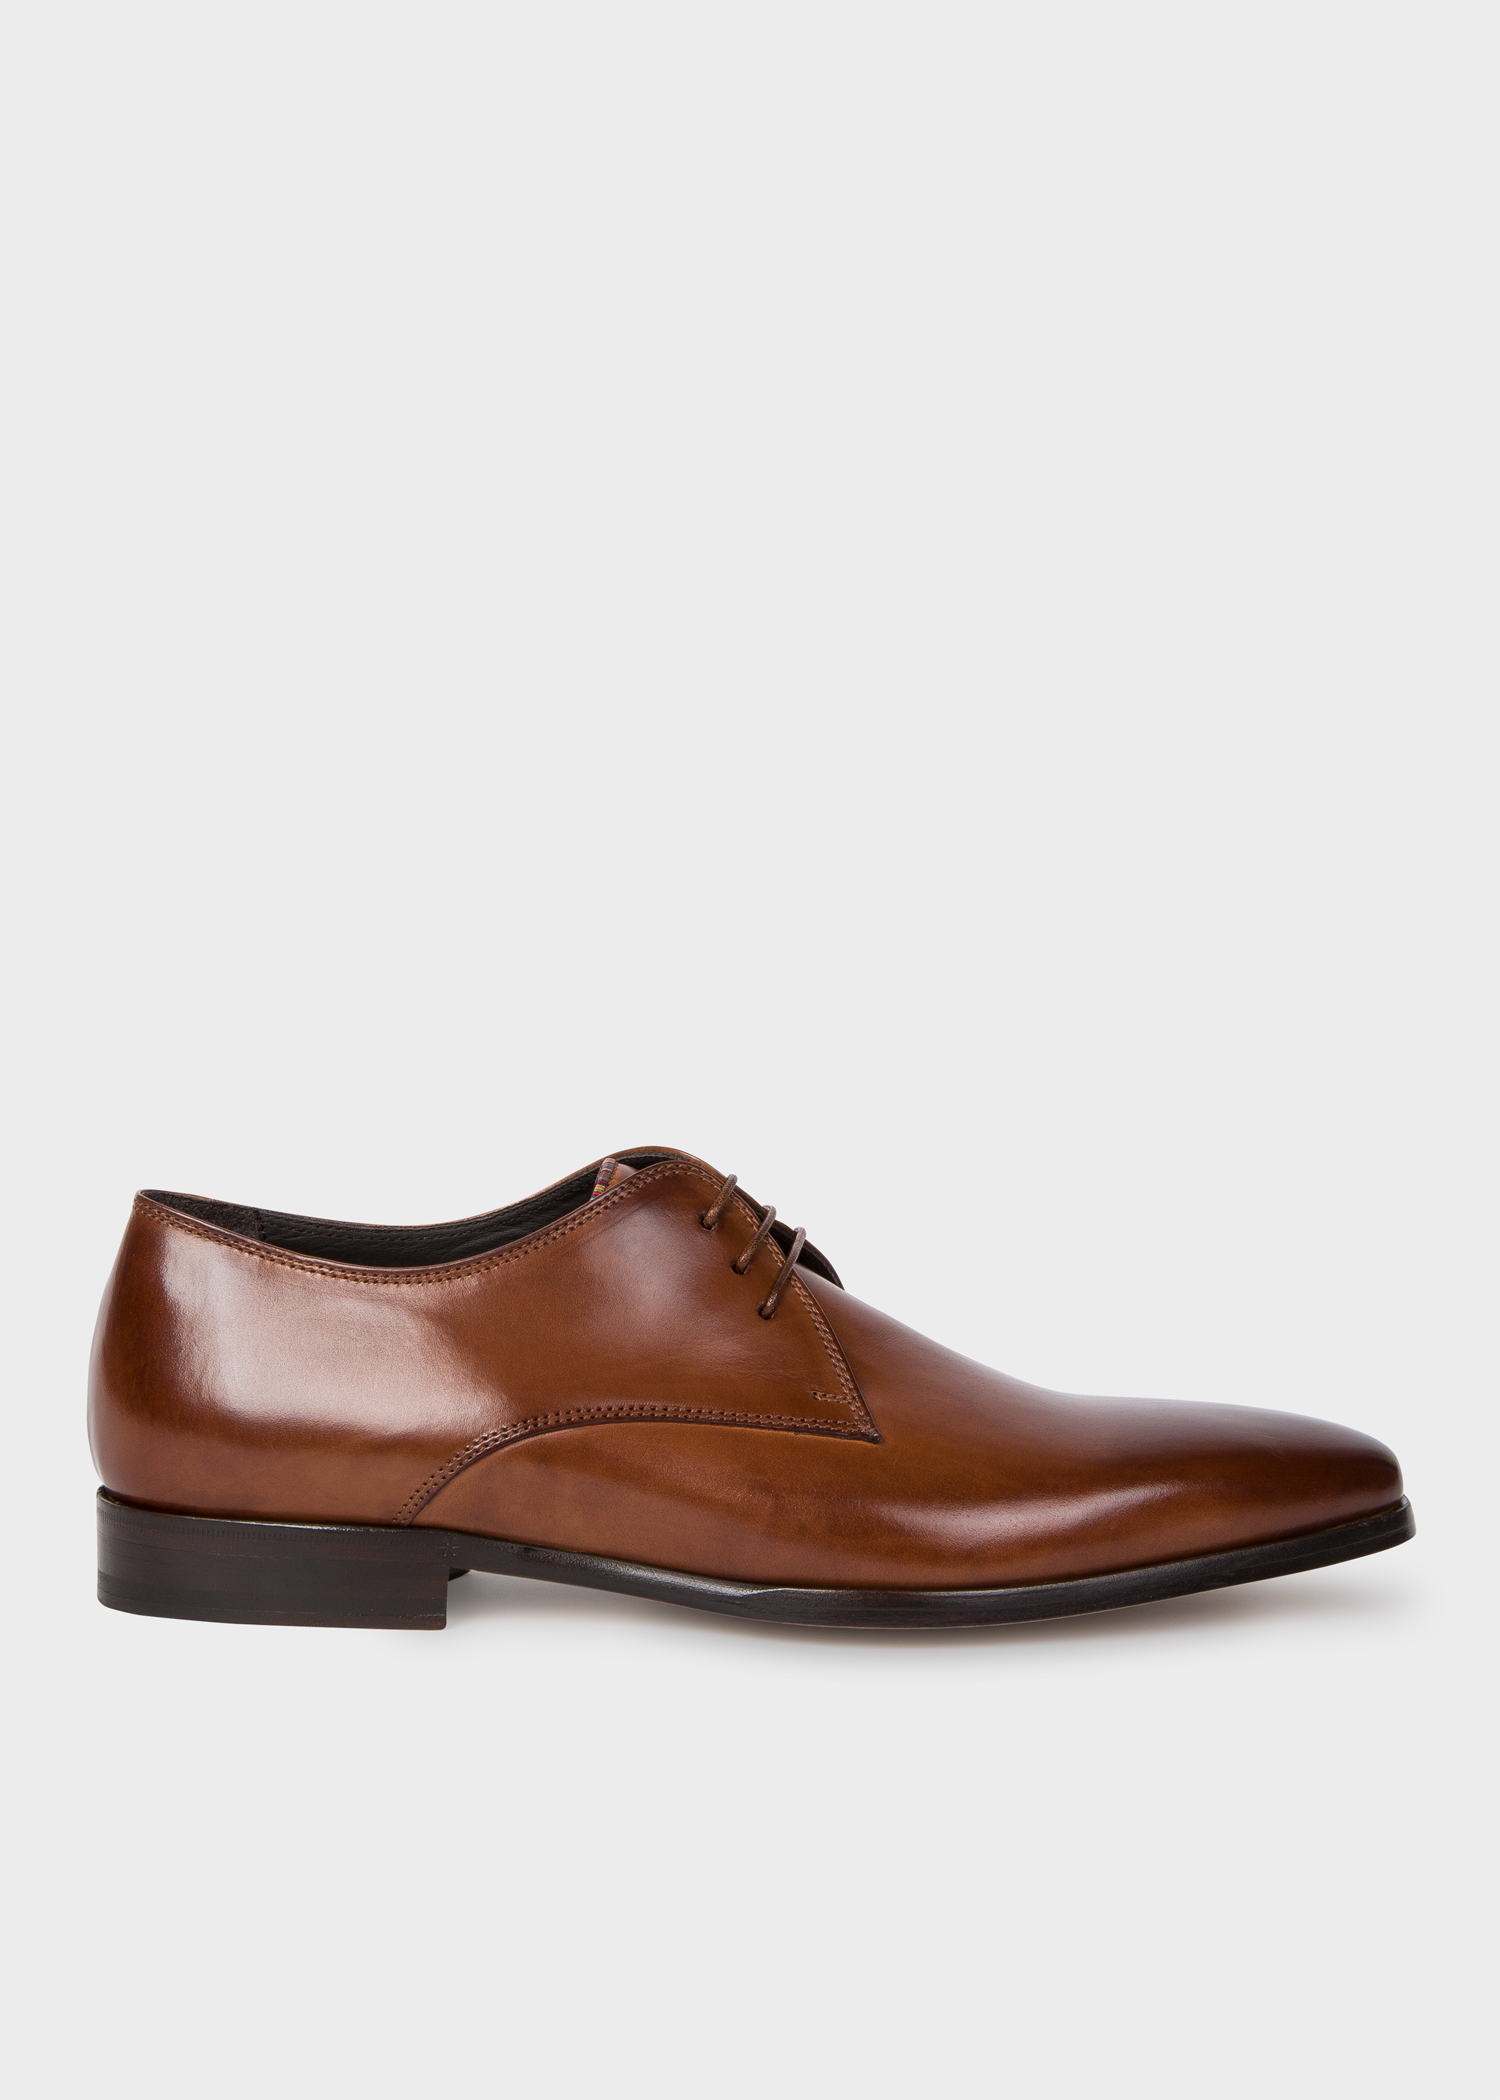 Men's Tan Leather 'Coyle' Derby Shoes With 'Signature Stripe' Details